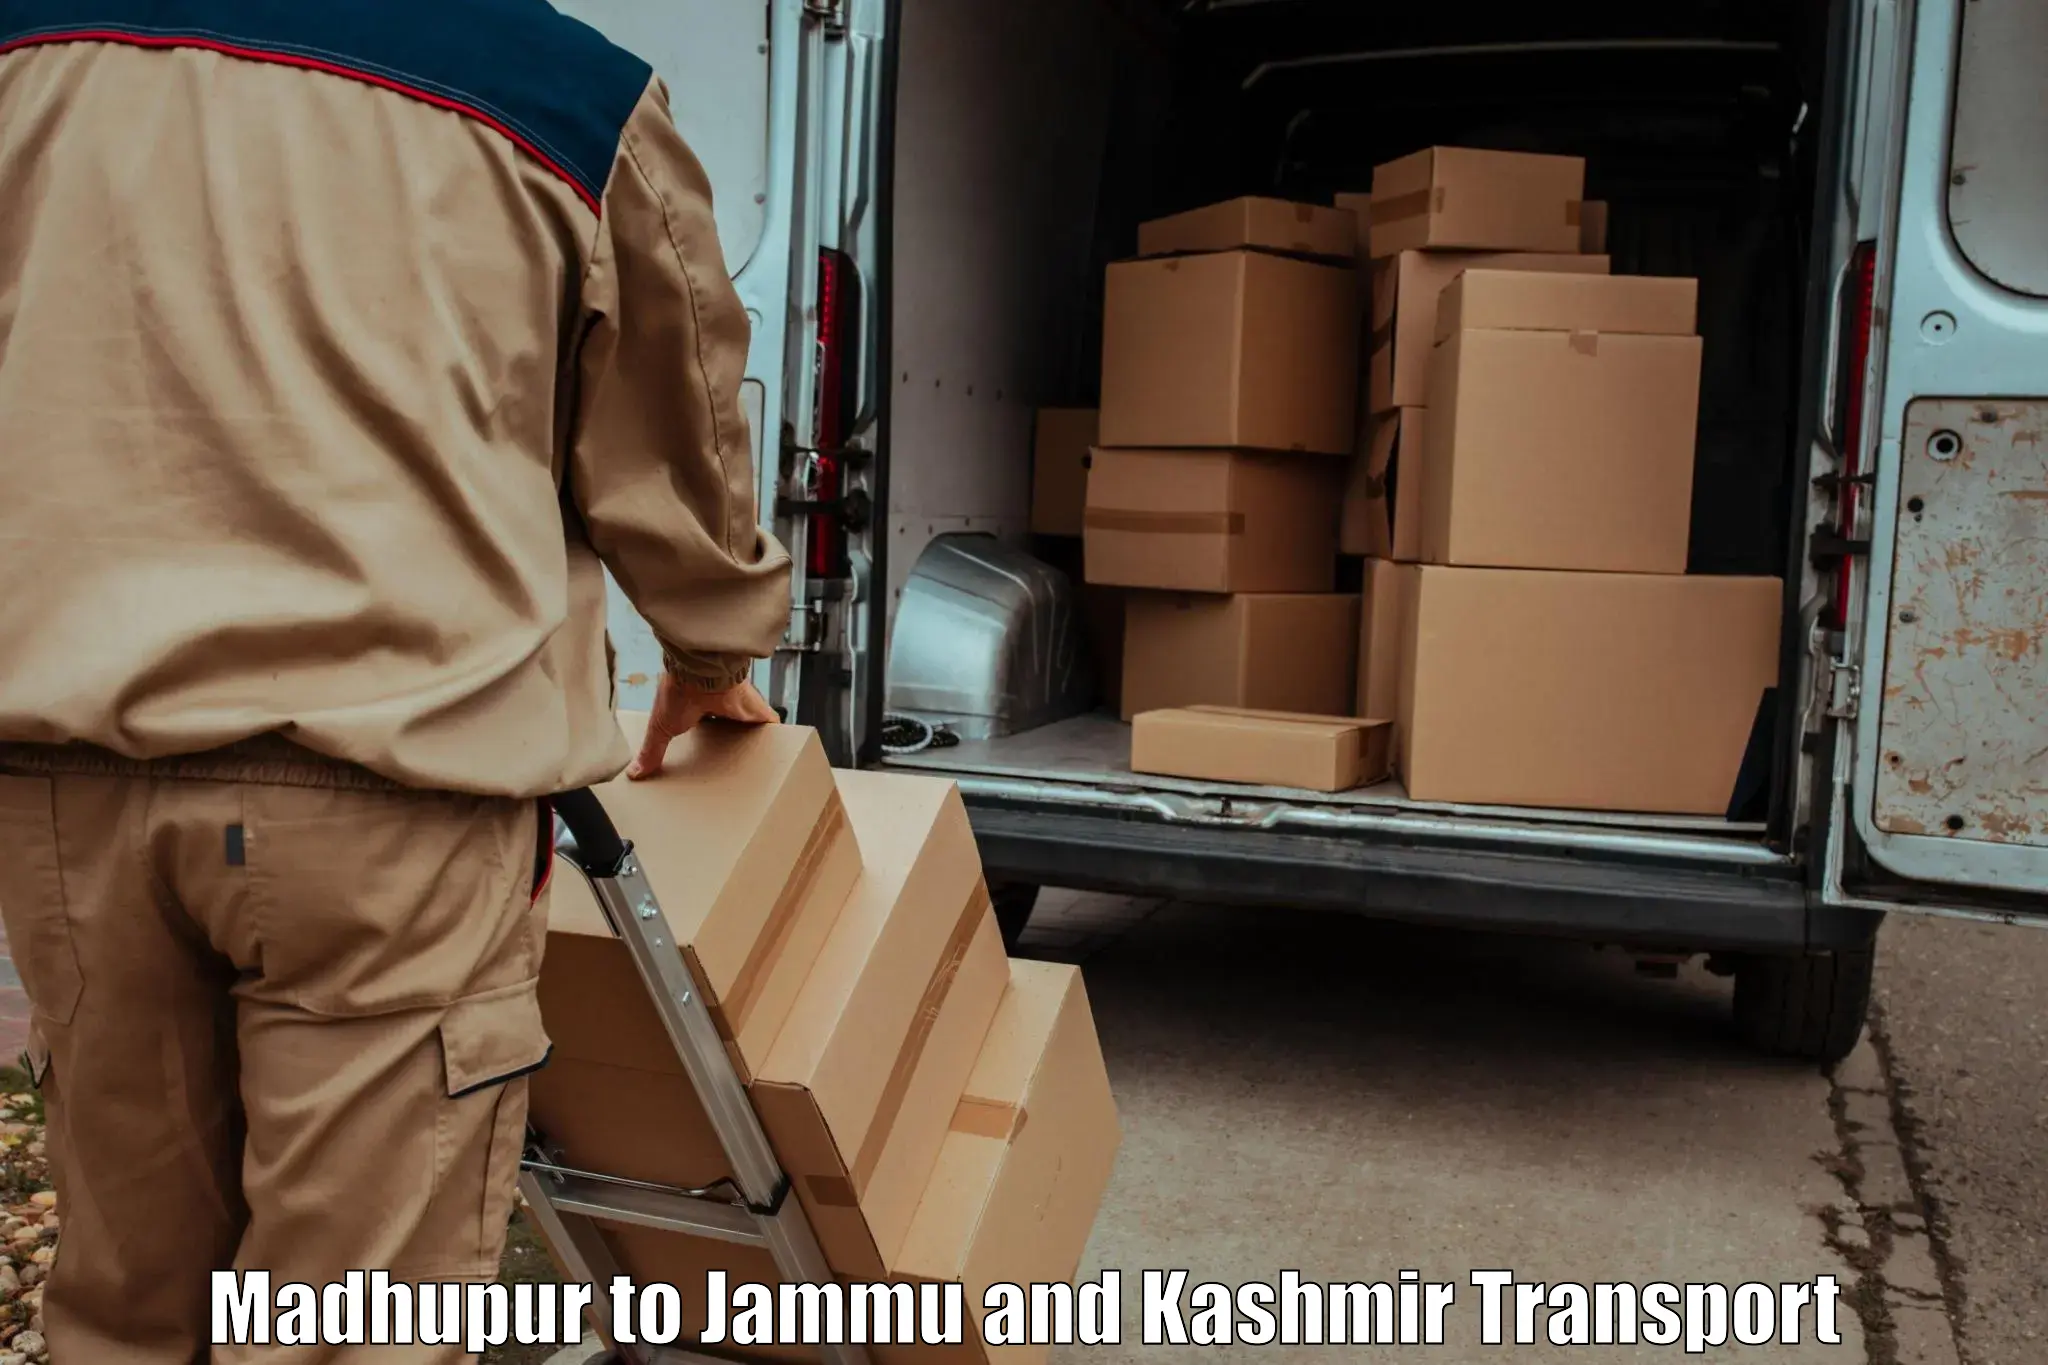 Truck transport companies in India Madhupur to Srinagar Kashmir